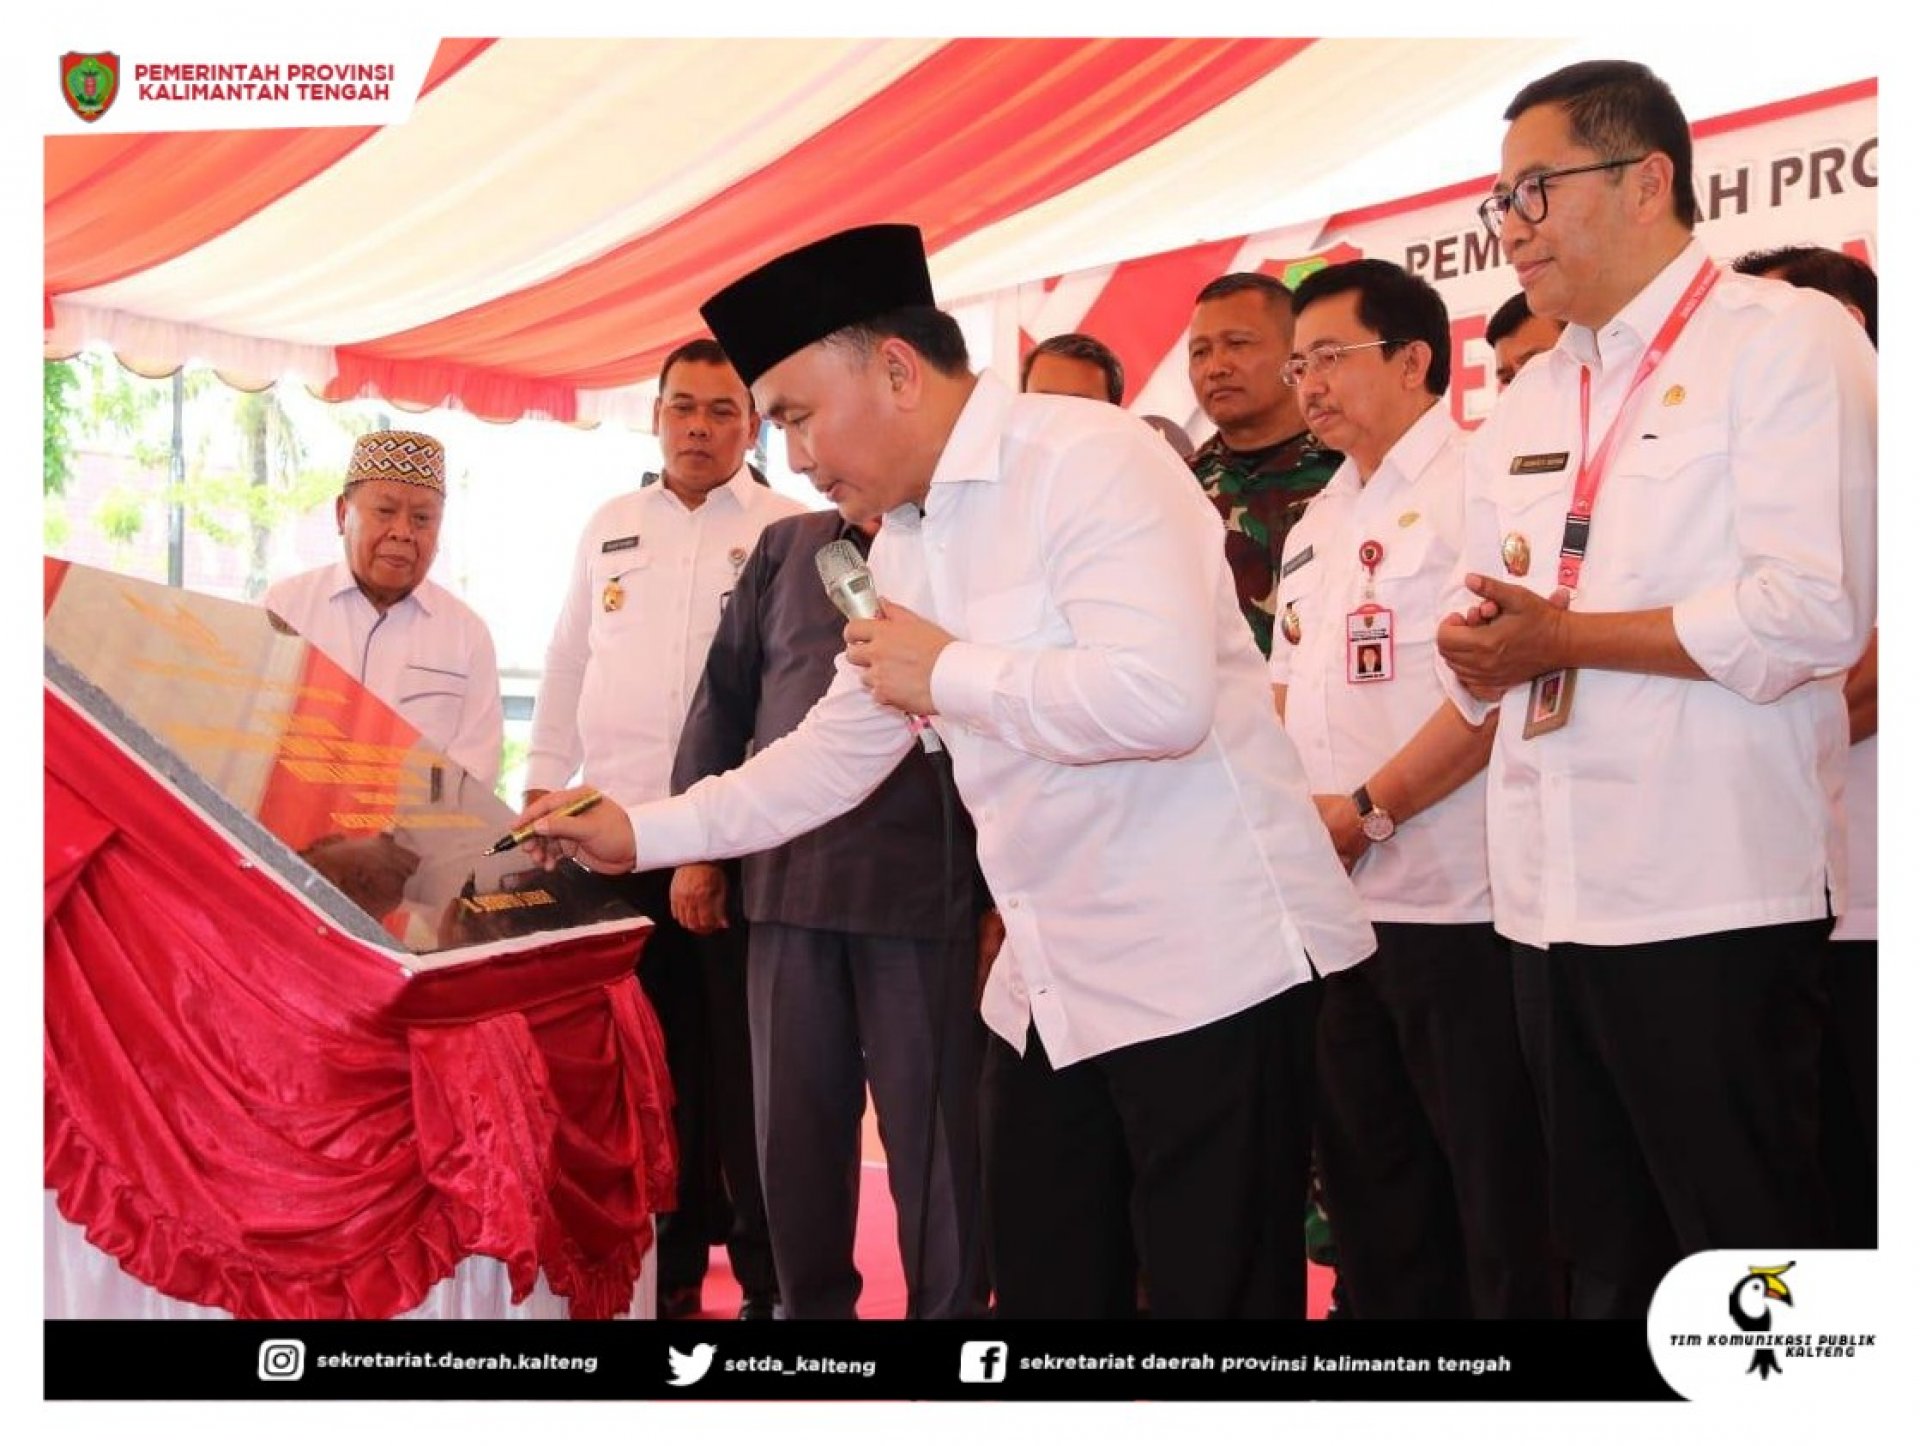 Gubernur Sugianto Resmikan Gedung Kantor Disperkimtan Provinsi Kalimantan Tengah